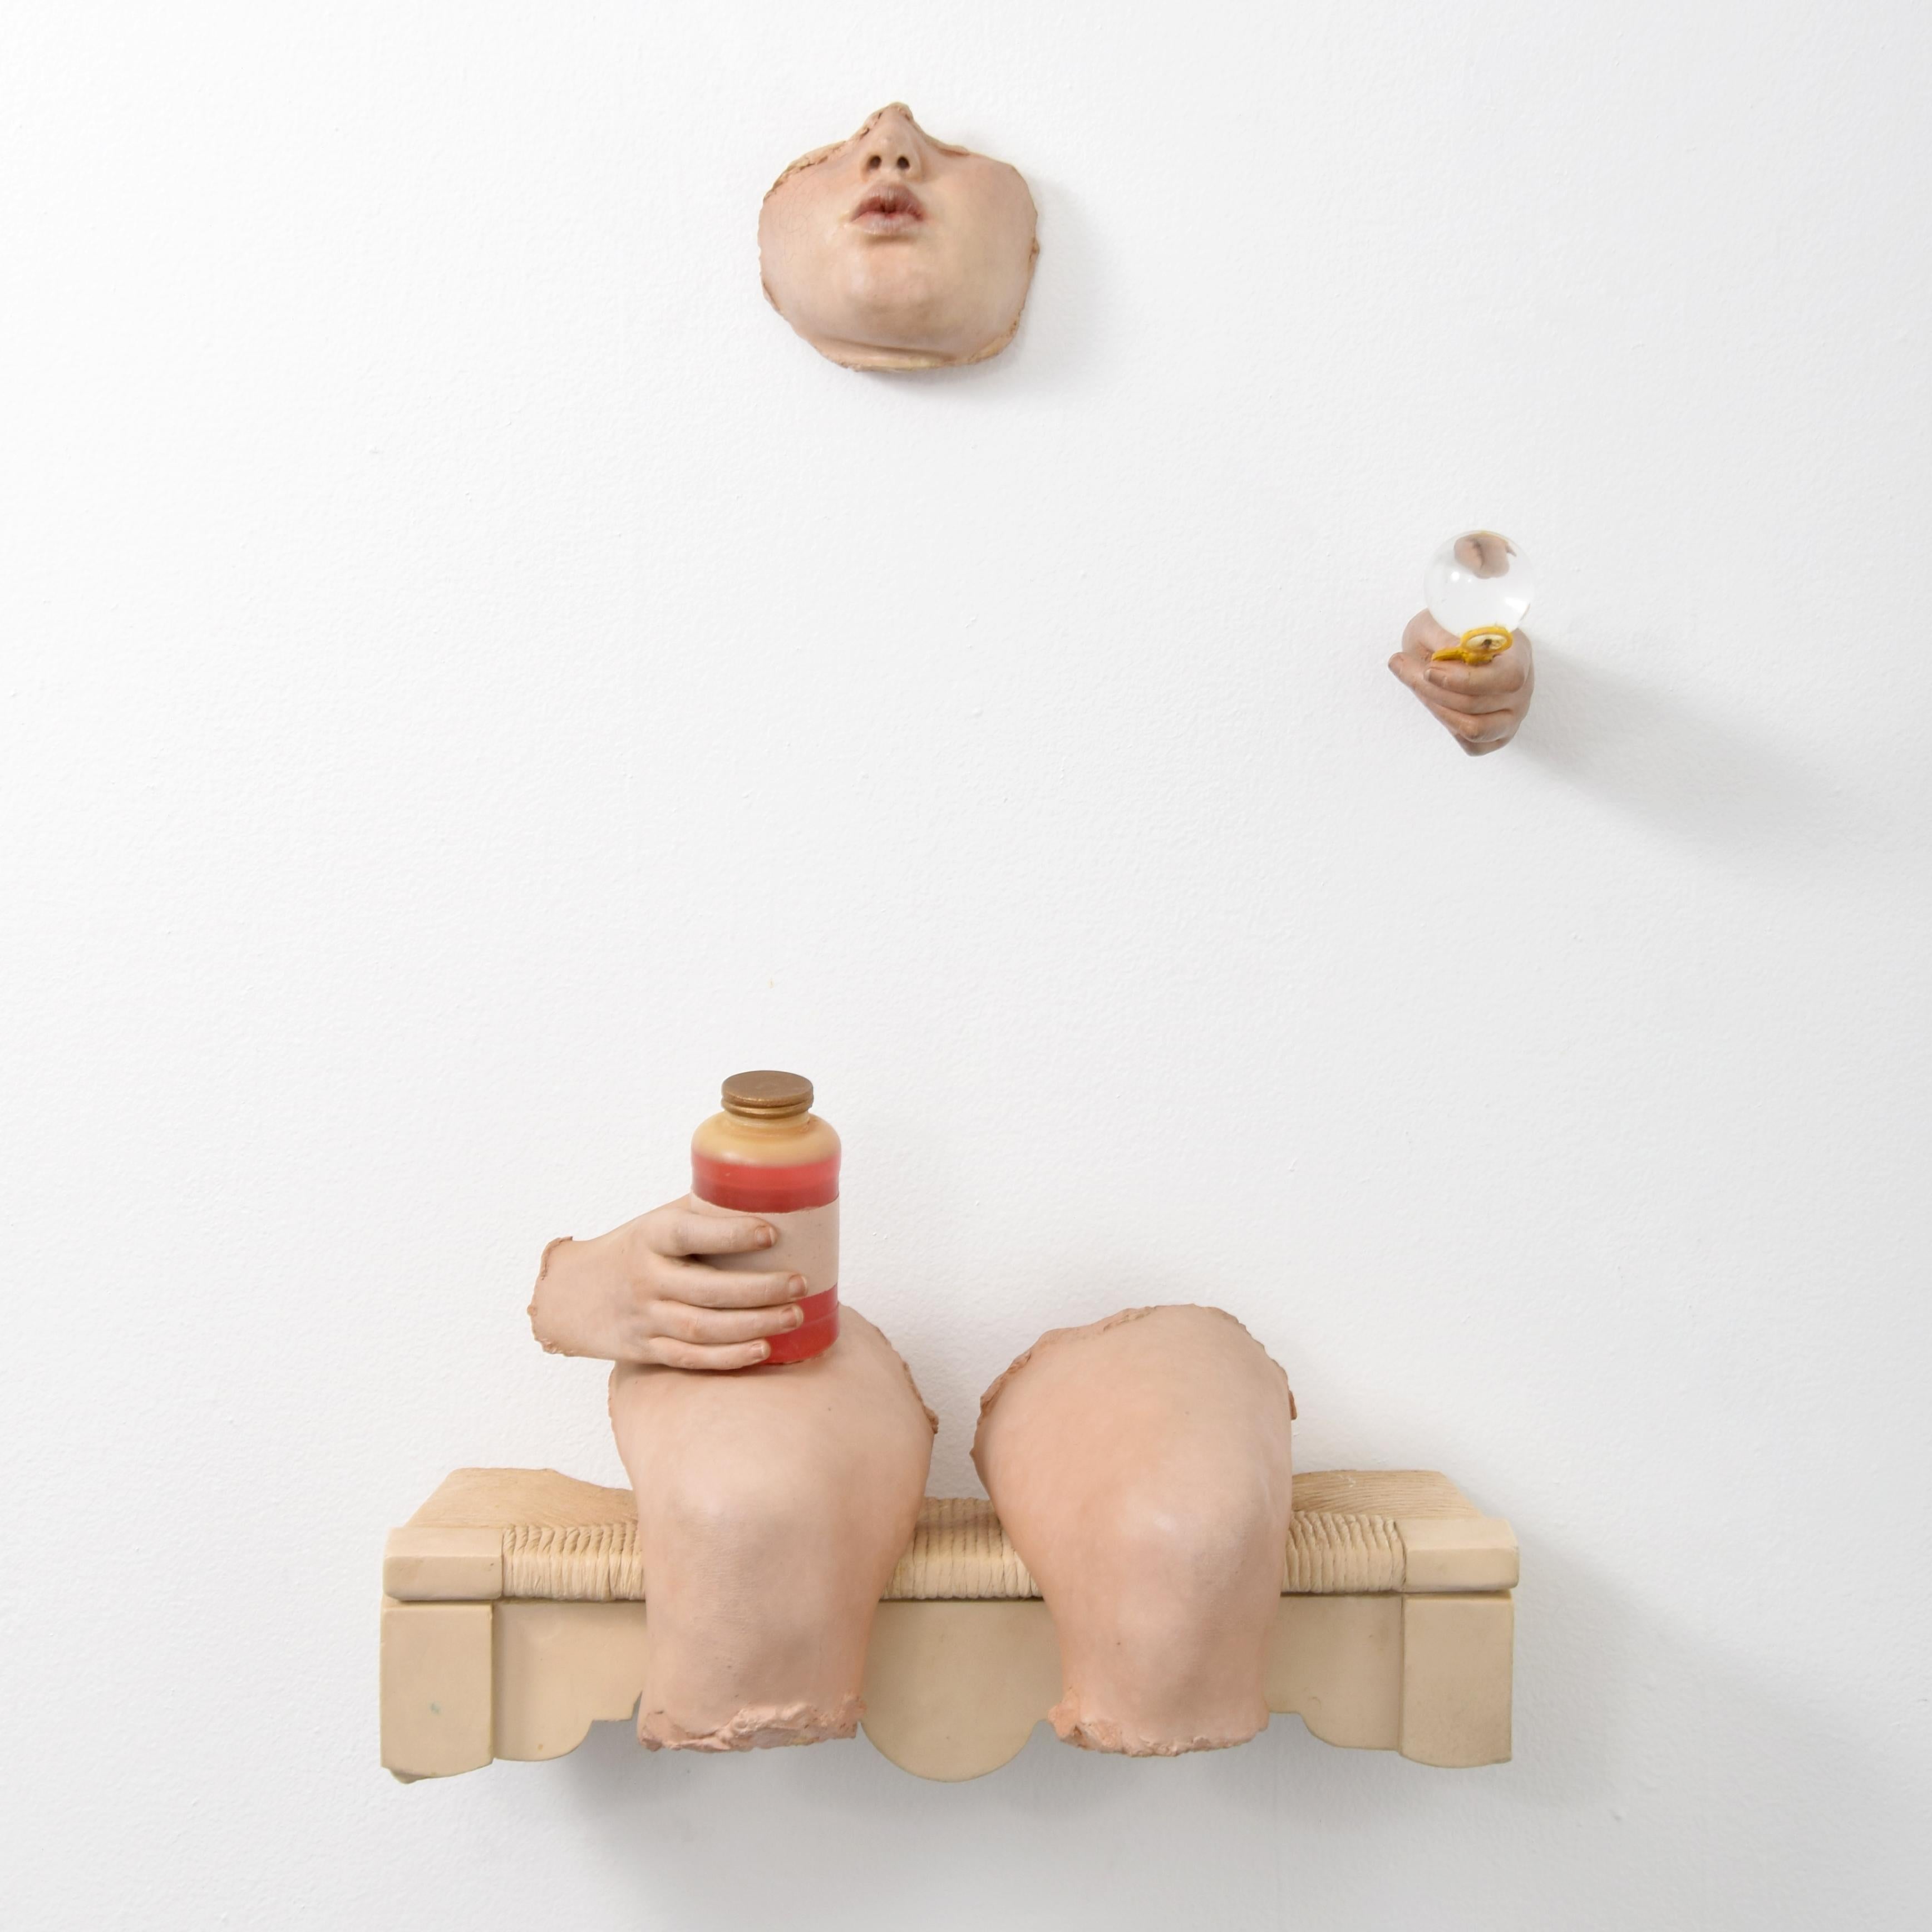 Installation de sculptures hyperréalistes Carole Feuerman